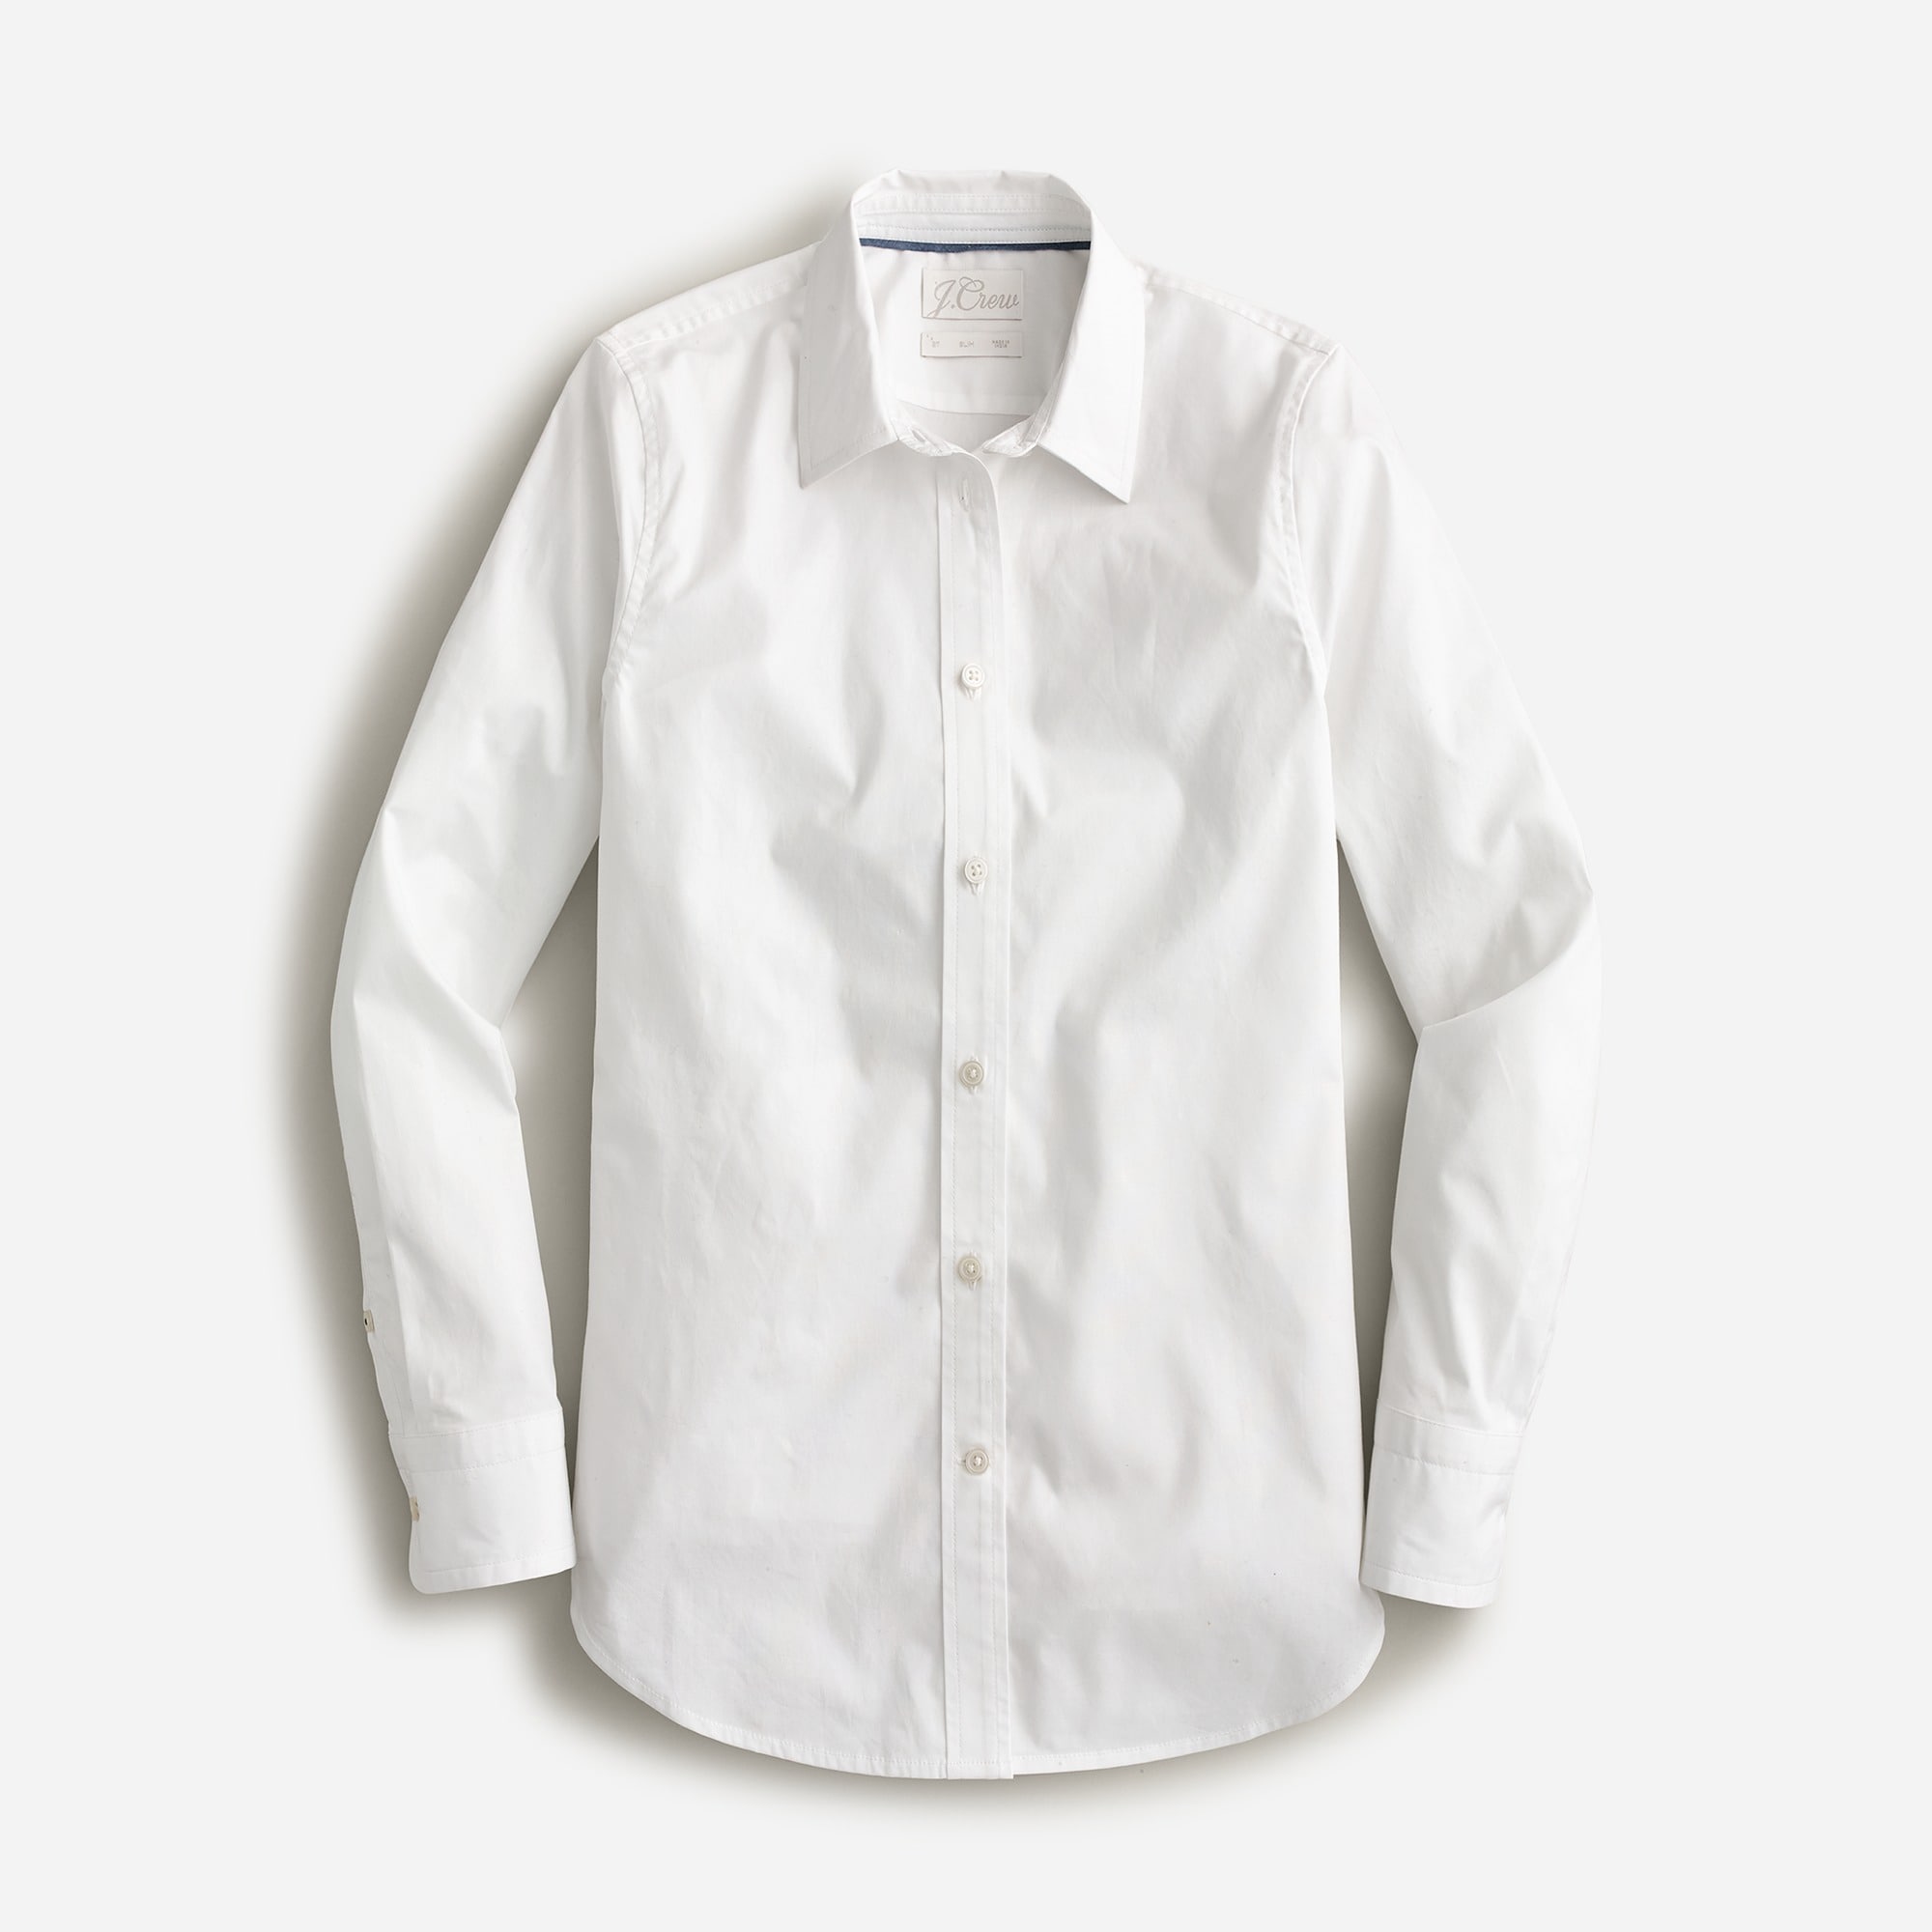  Slim-fit stretch cotton poplin shirt